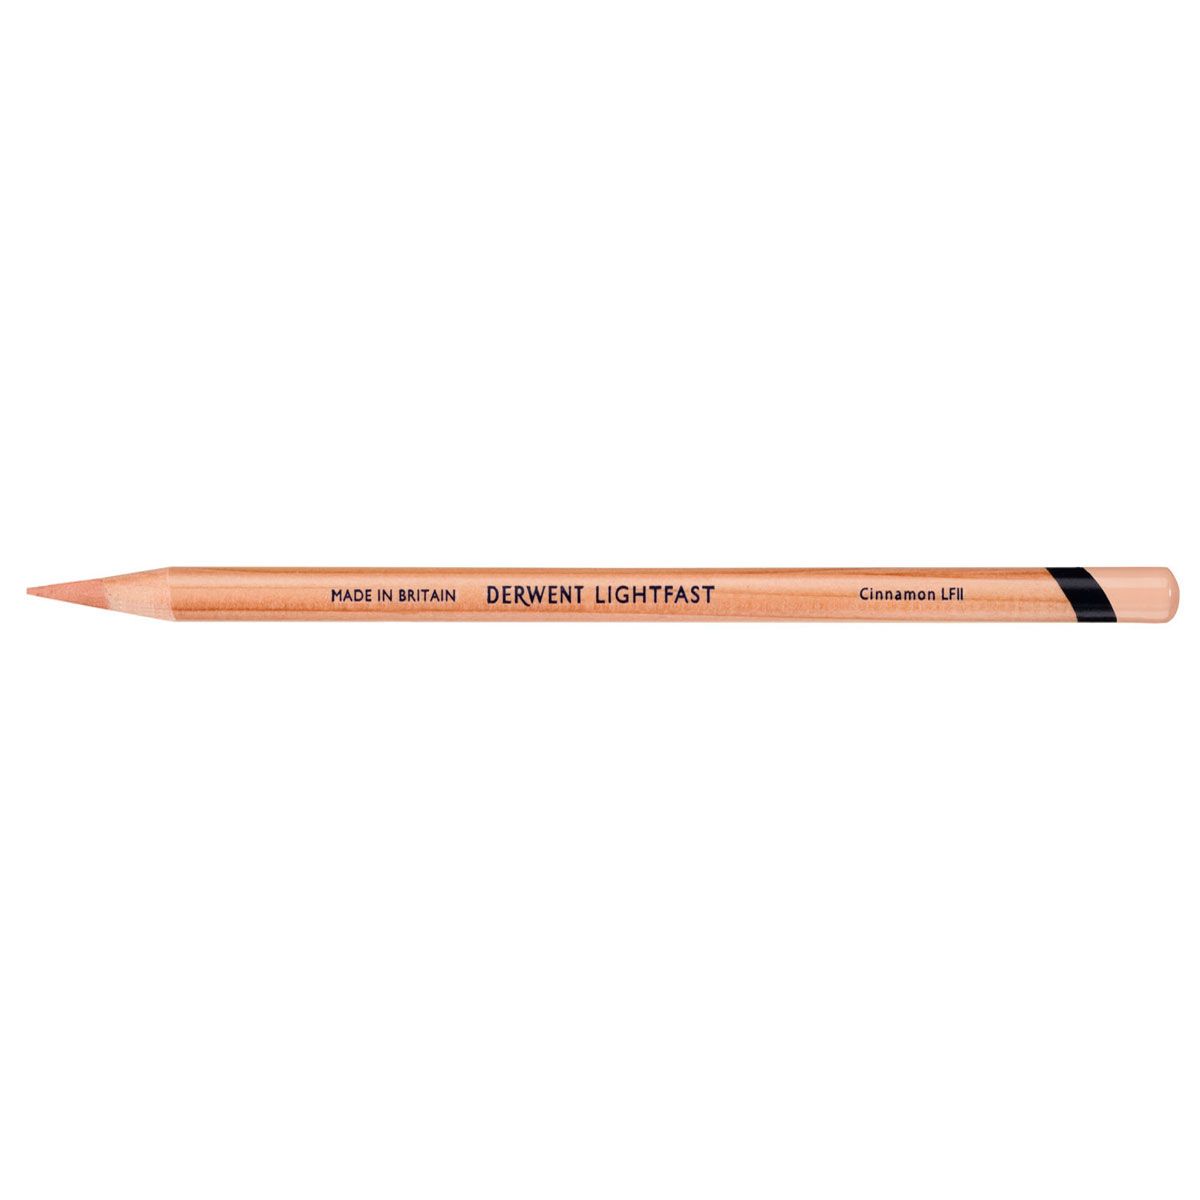 NEW Derwent Lightfast Pencil Colour: Cinnamon